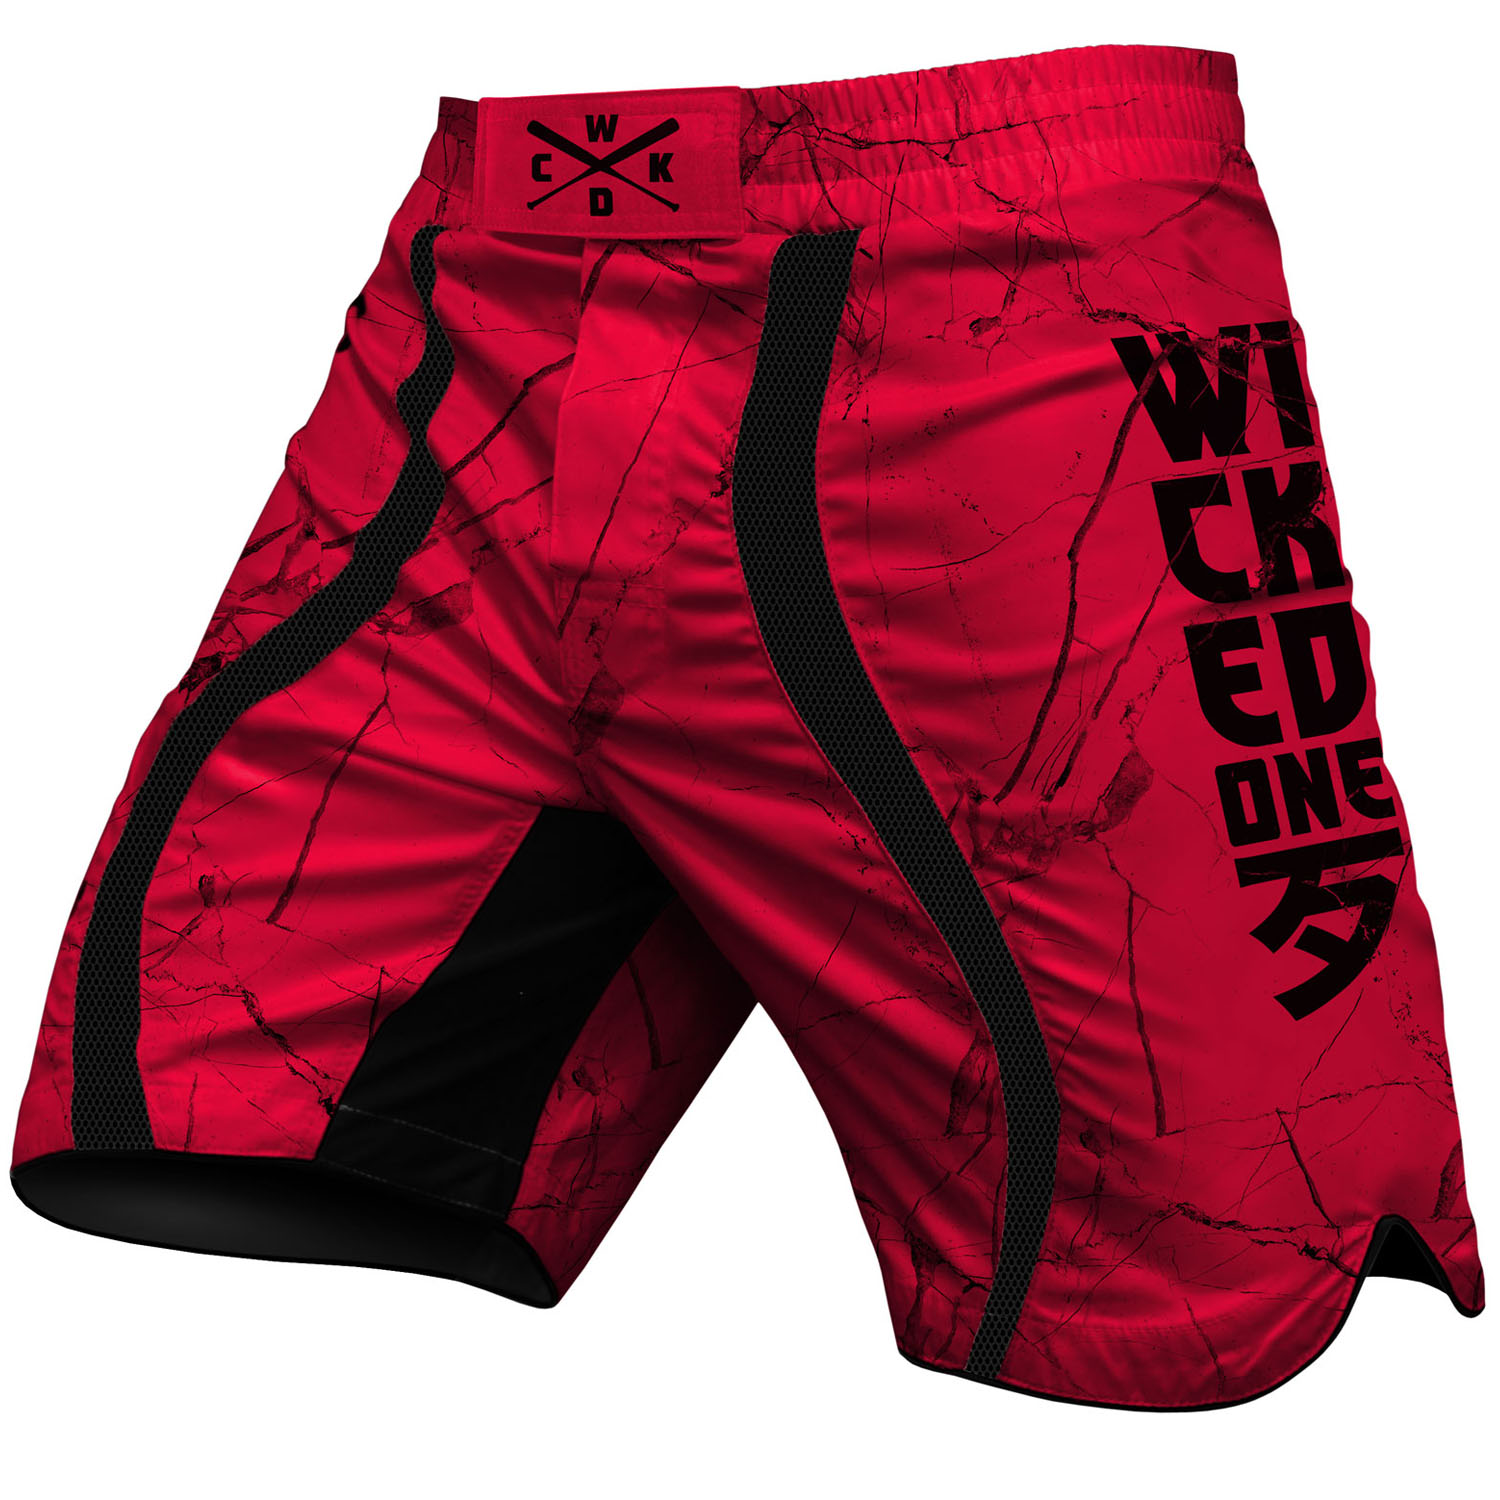 Wicked One MMA Fight Shorts, Broken, red, XXL